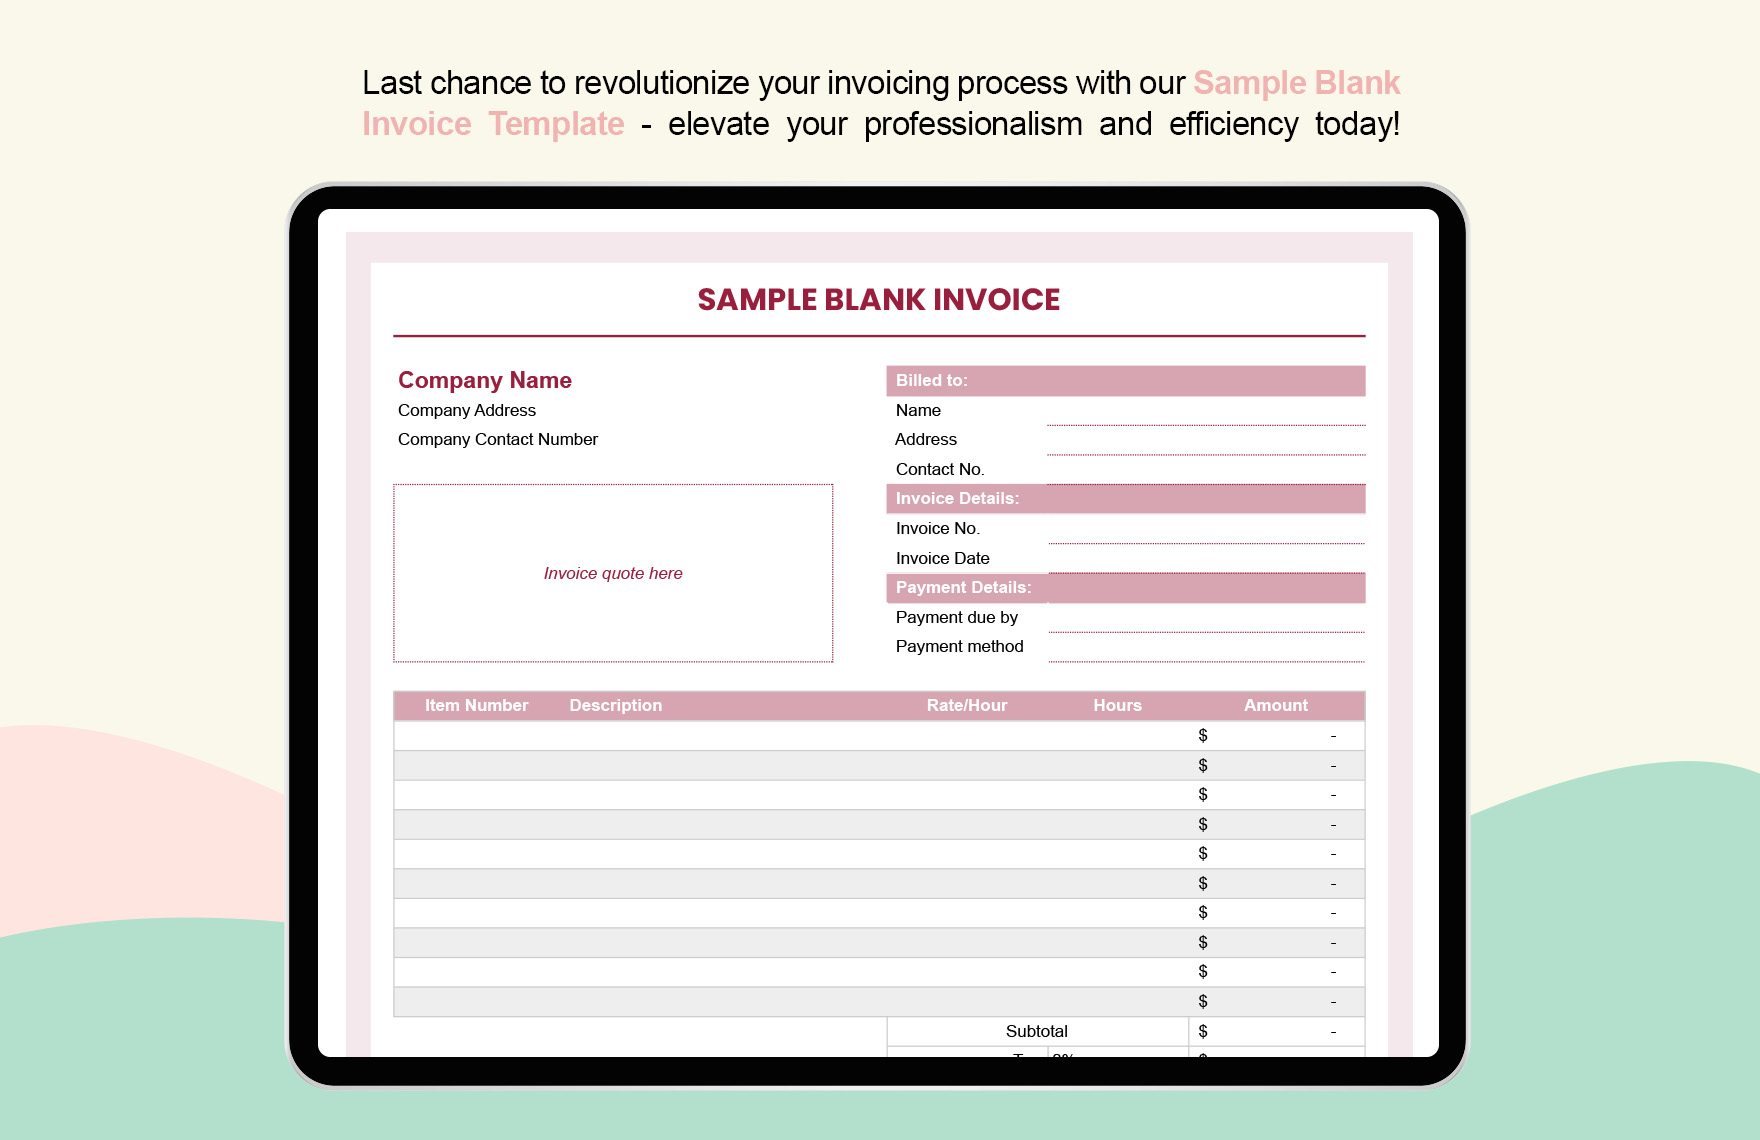 Sample Blank Invoice Template